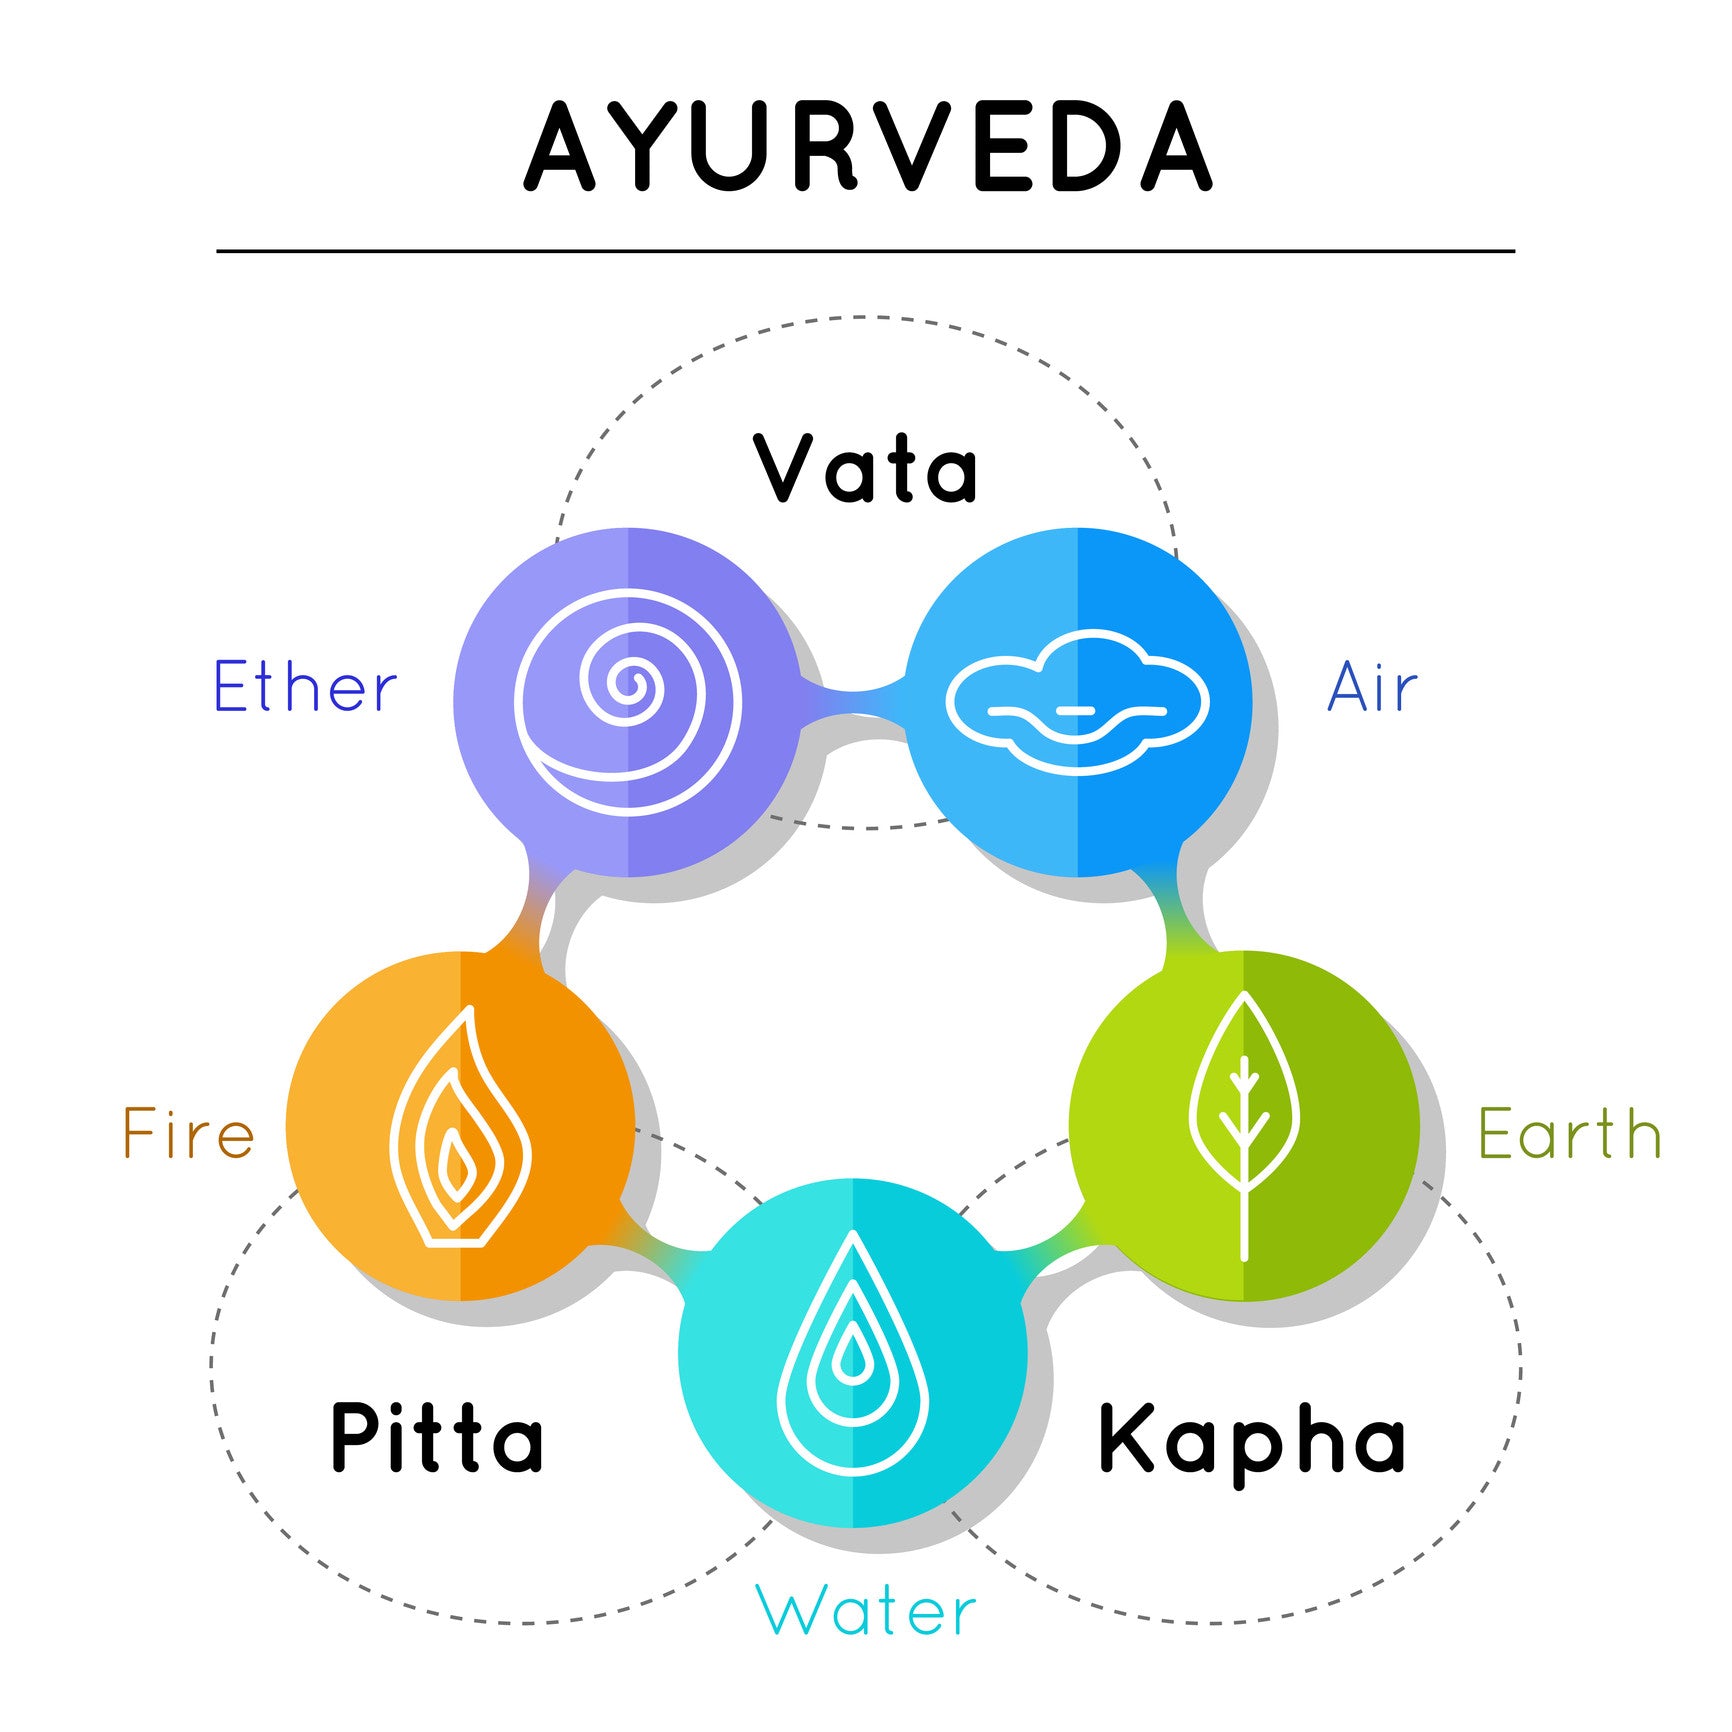 The Basics of Ayurveda